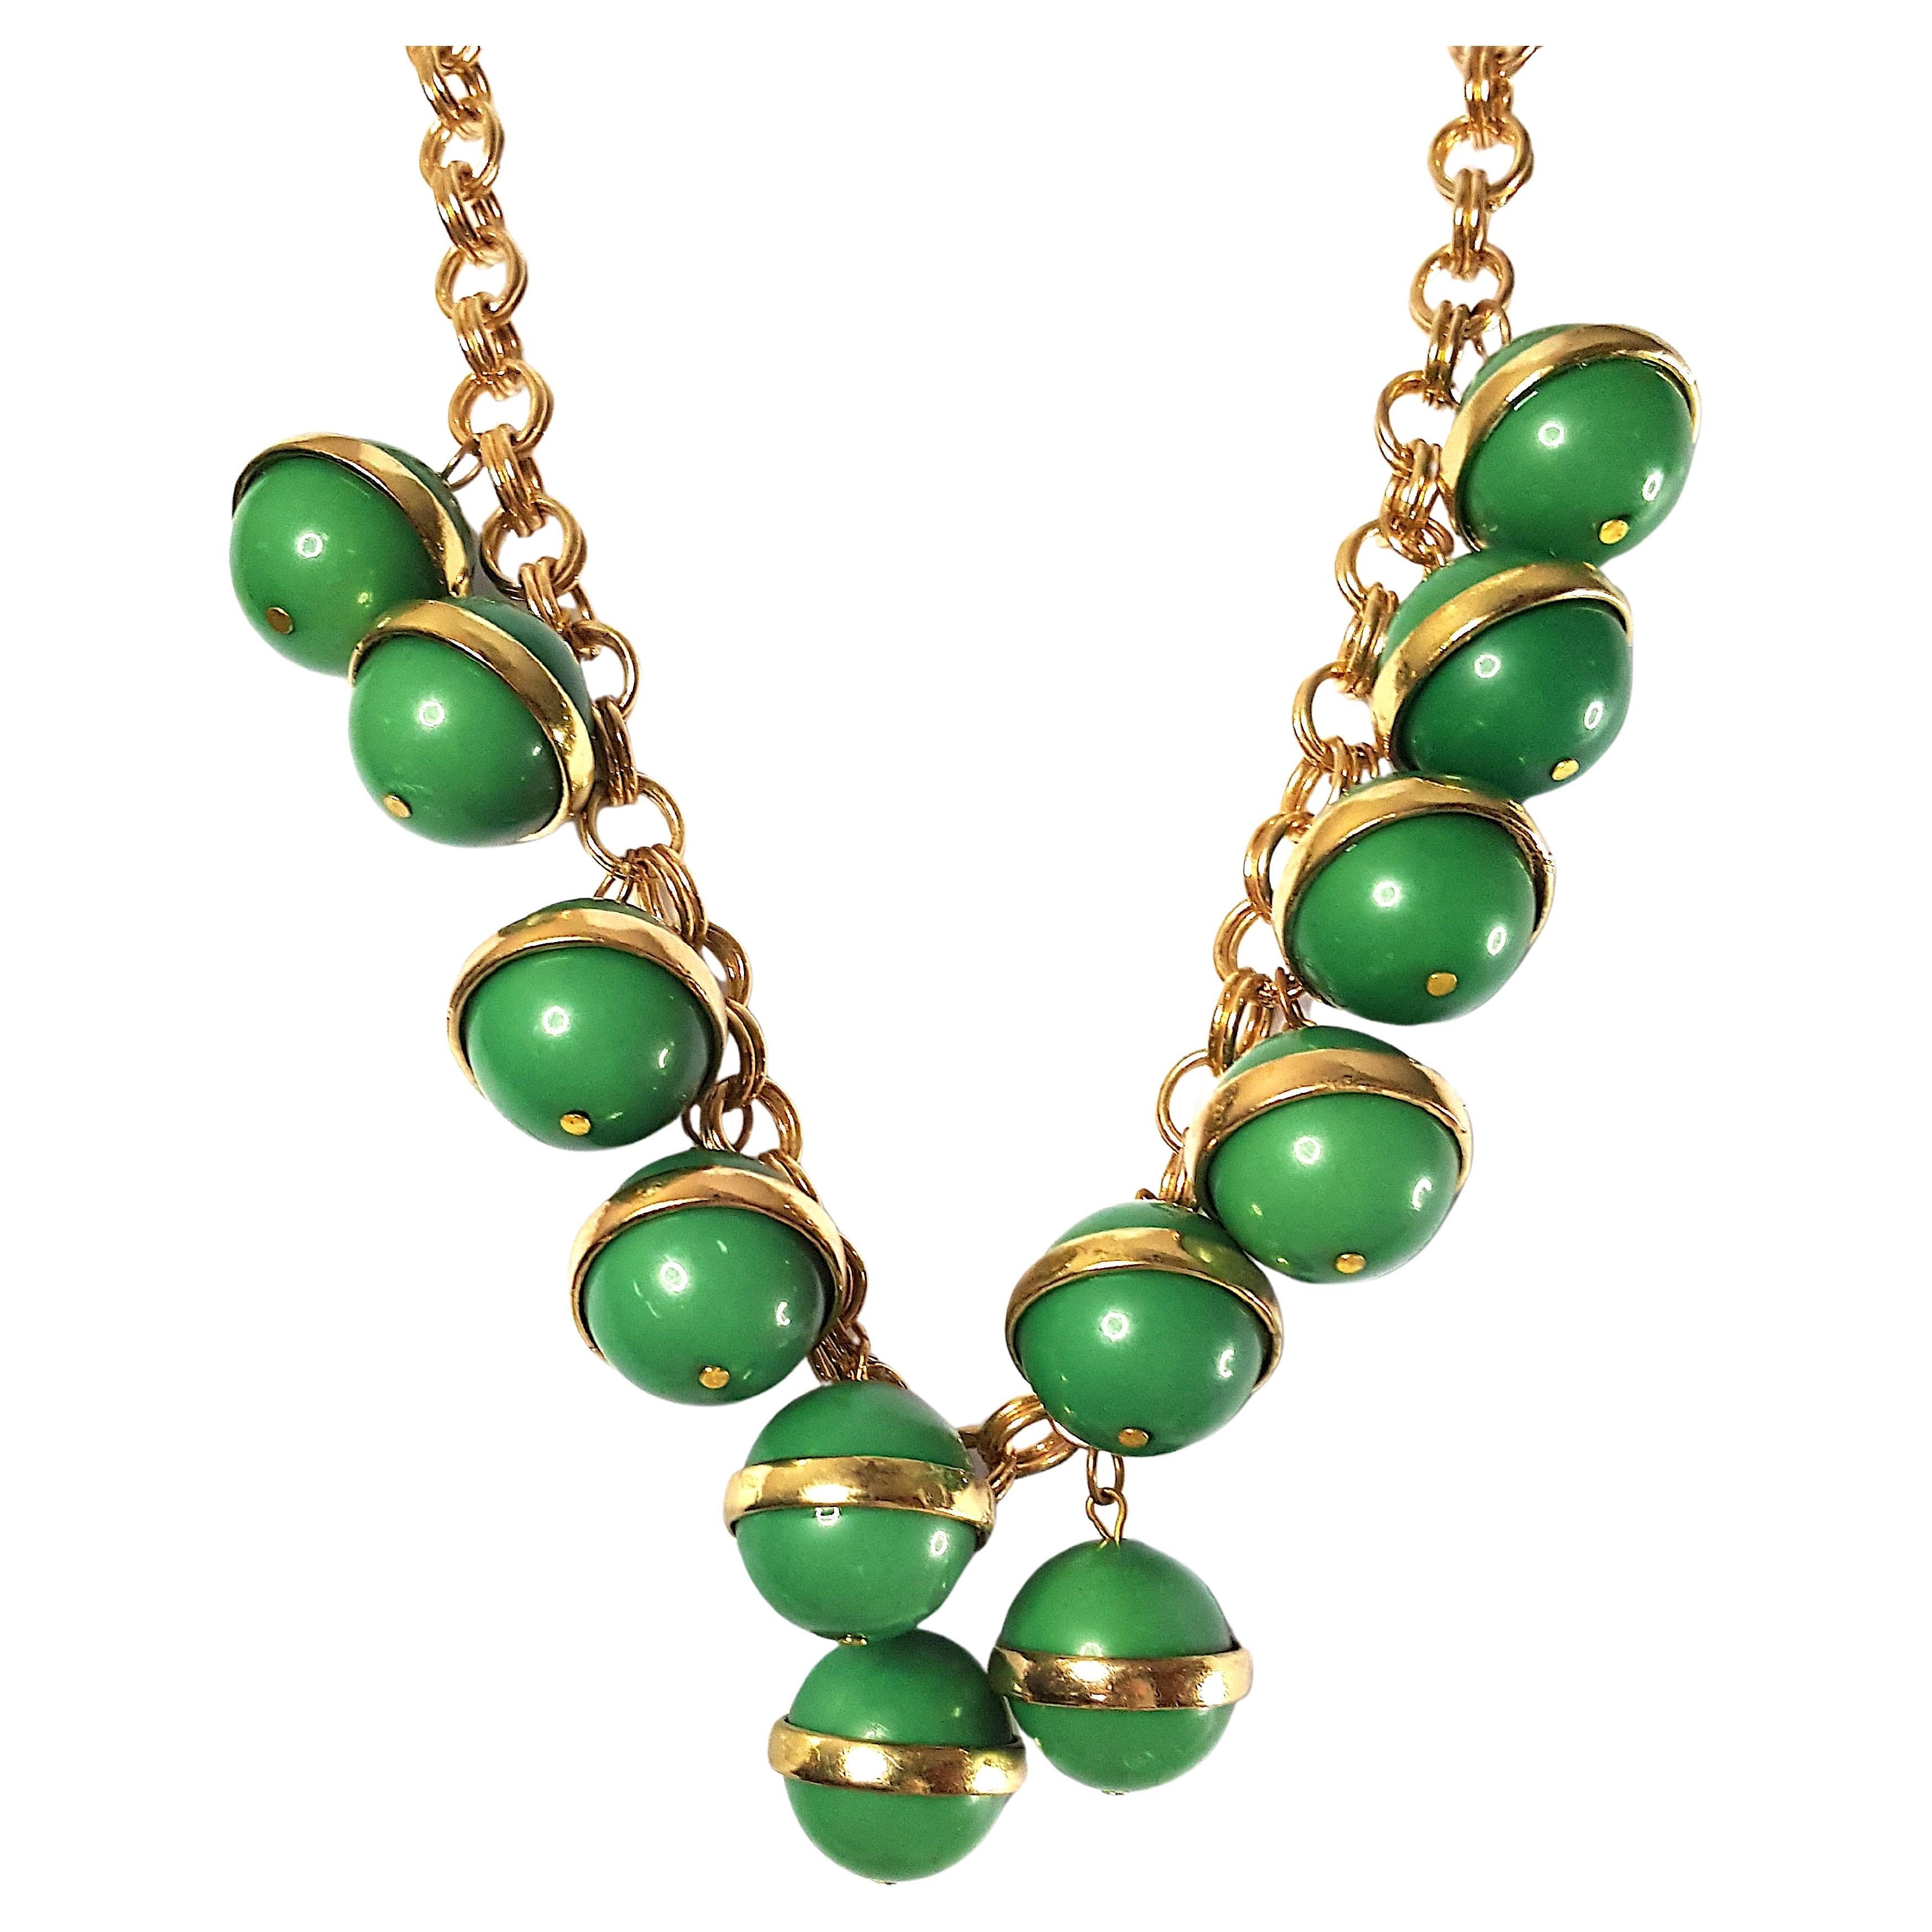 Art Deco Bakelite 1930s German ArtDeco GoldRinged EmeraldBallPendants ChainLink Necklace For Sale